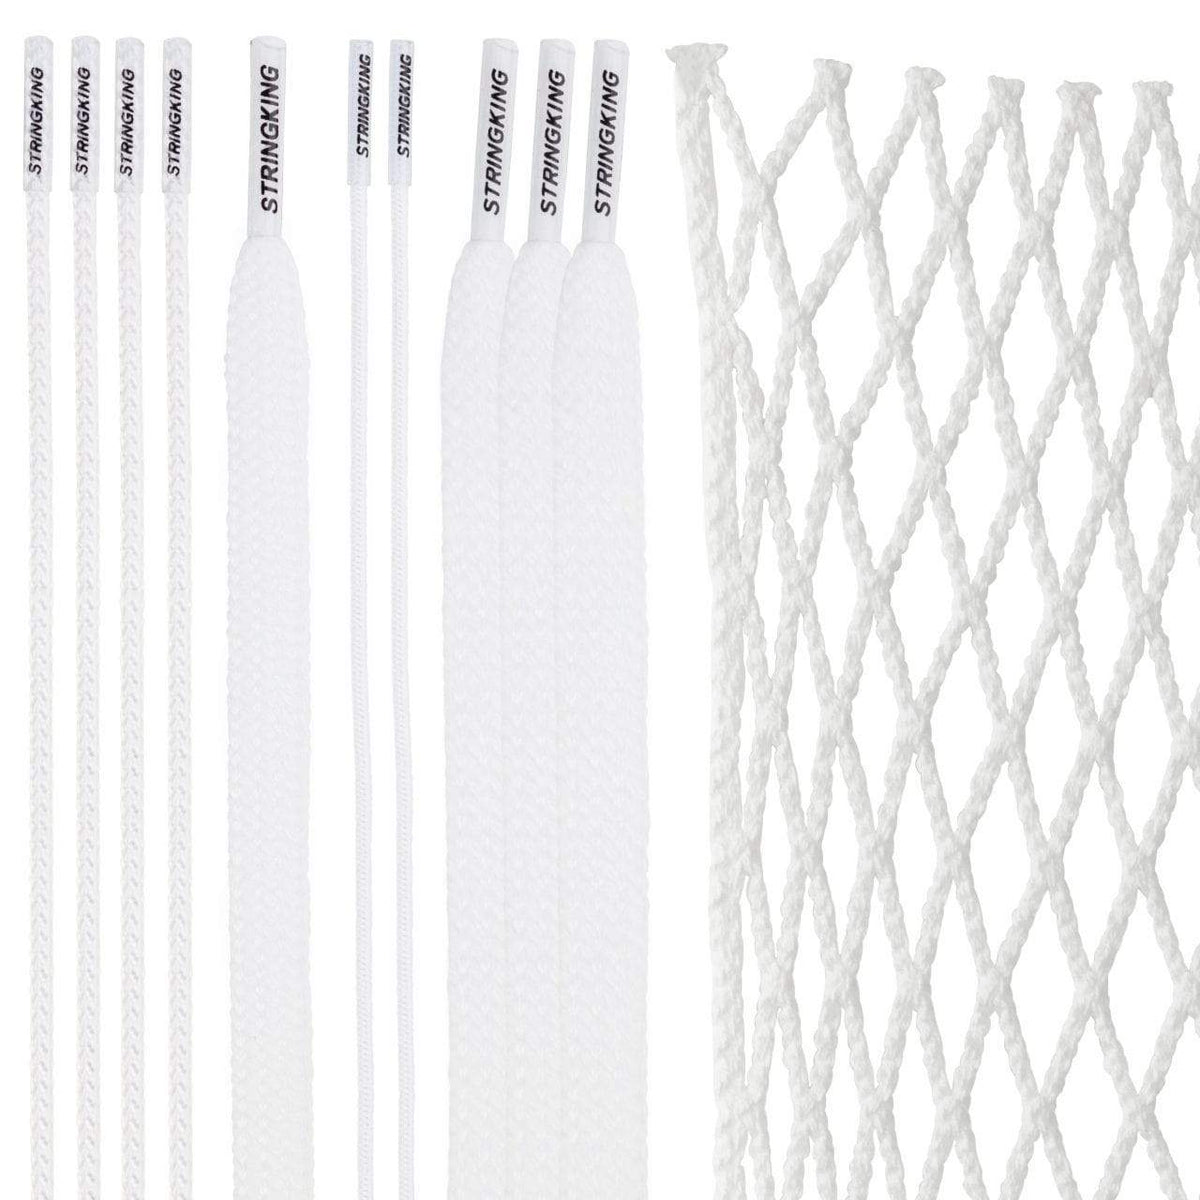 StringKing Grizzly 2x Semi-Hard Goalie Lacrosse Mesh Kit